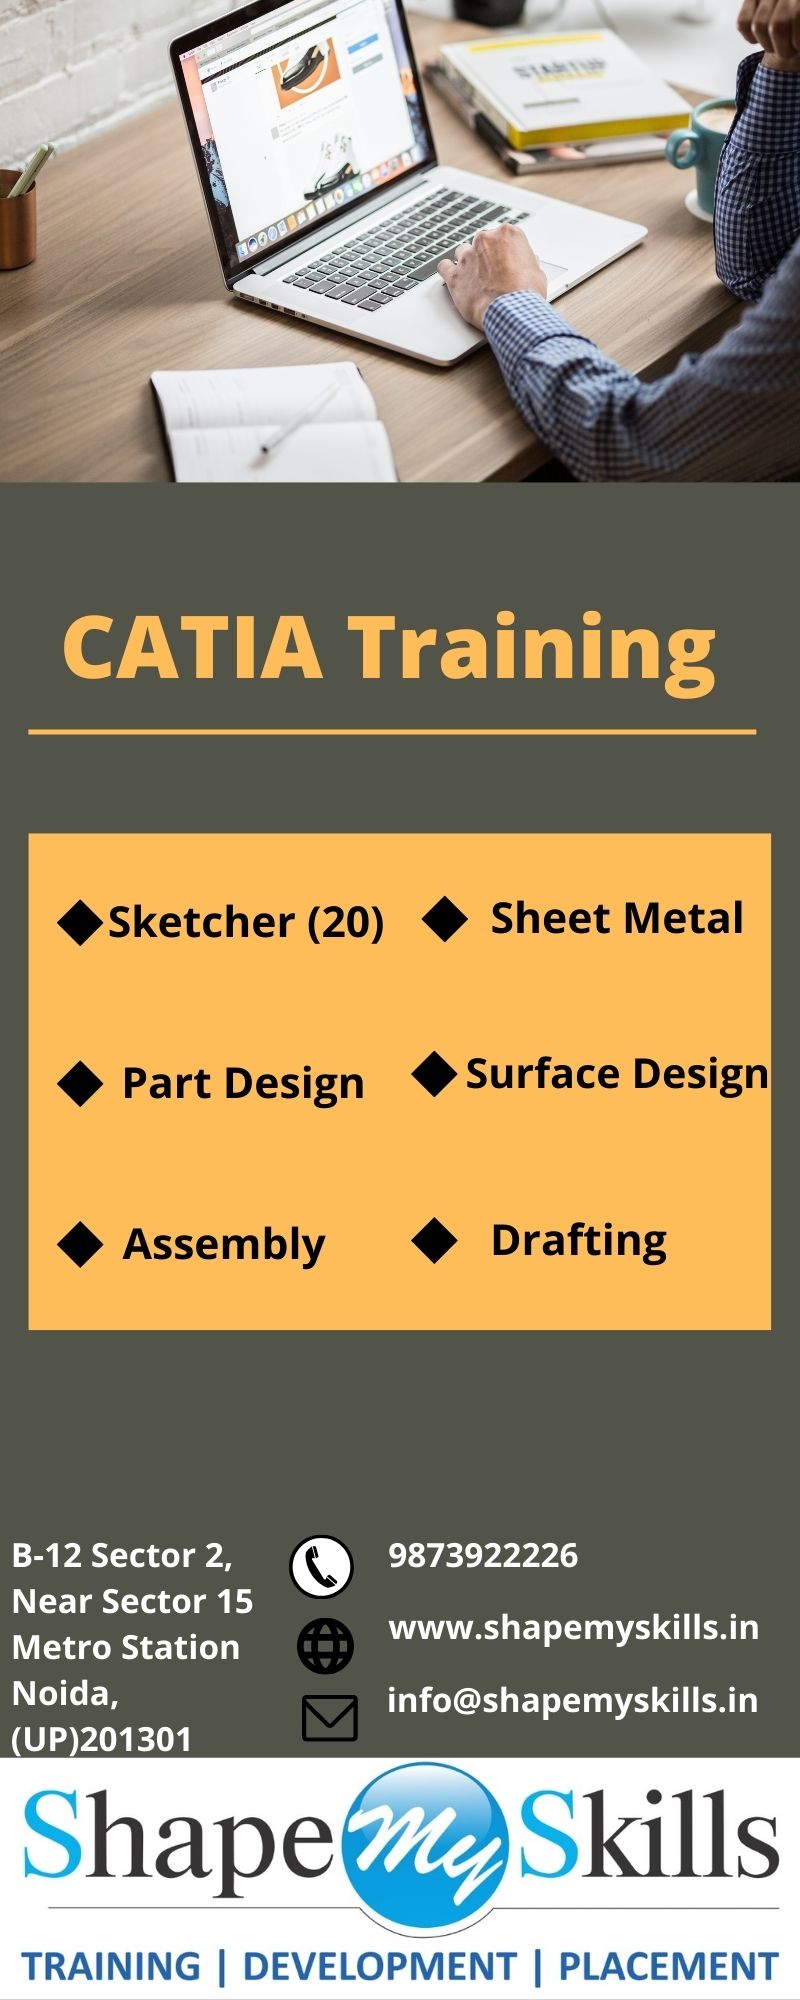 Best Training institute for learning Catia Training in Noida